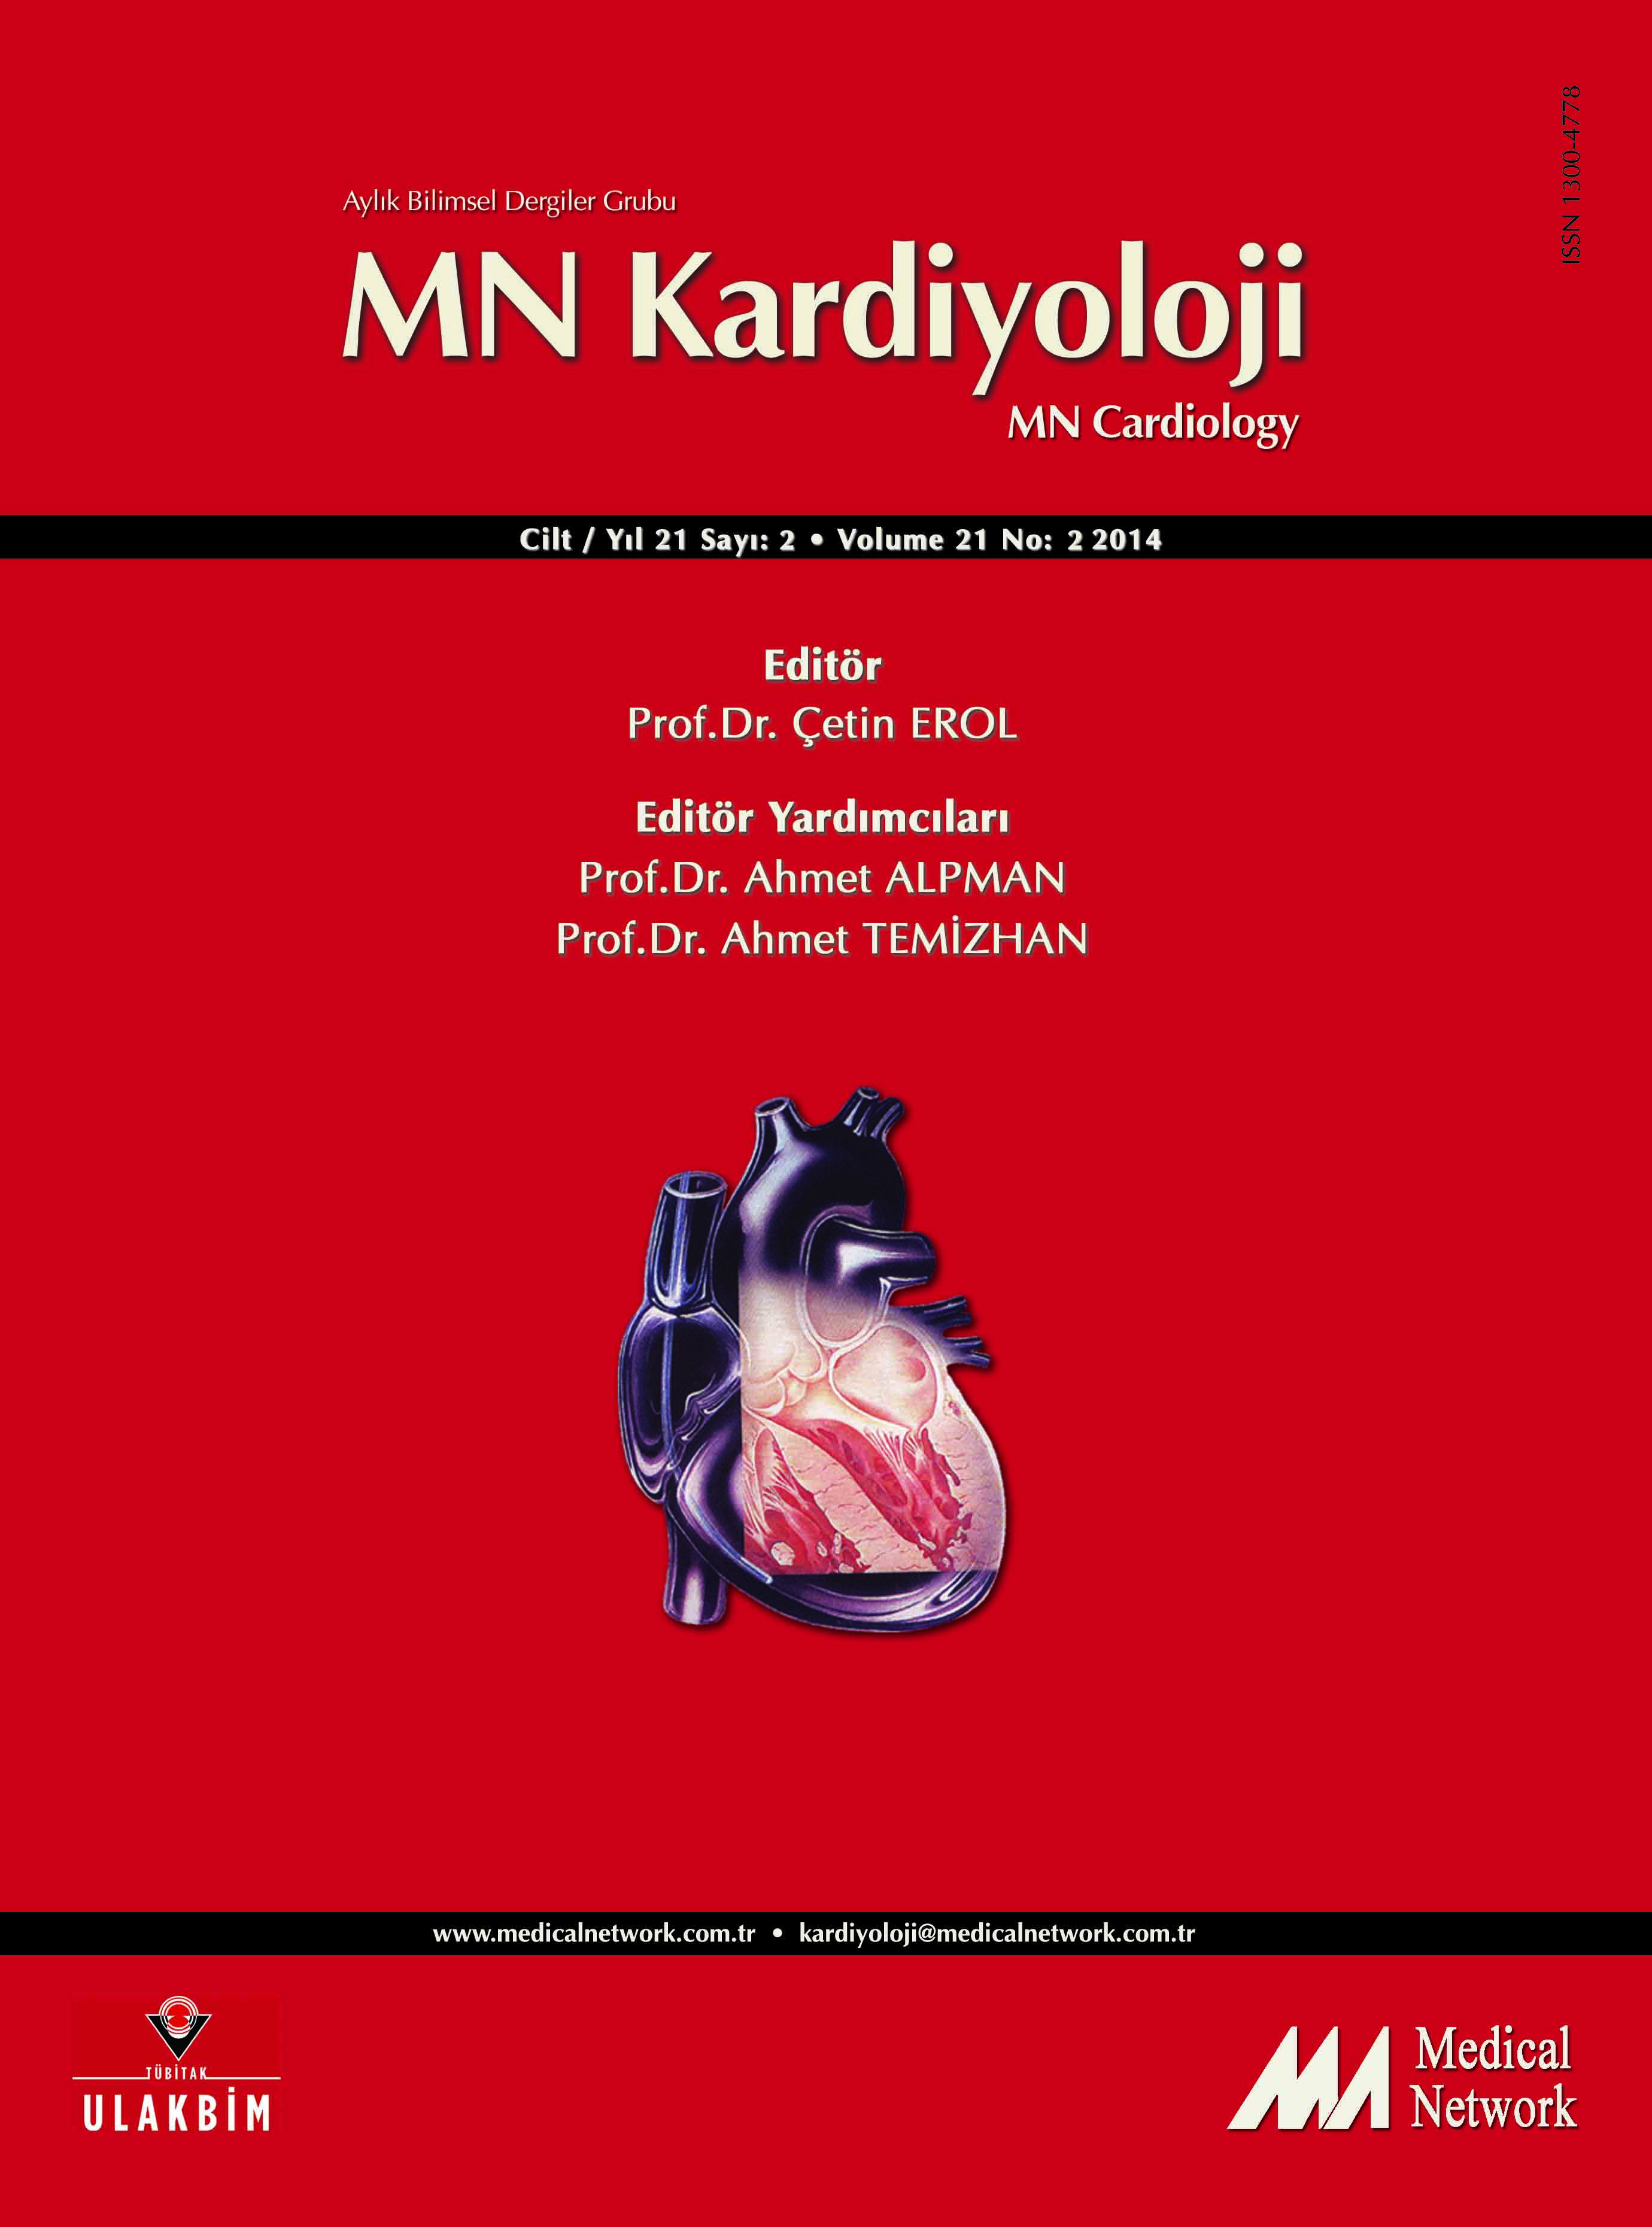 <p>MN Kardiyoloji Cilt: 21 Sayı: 2 2014 (MN Cardiology Volume: 21 No: 2 2014)</p>